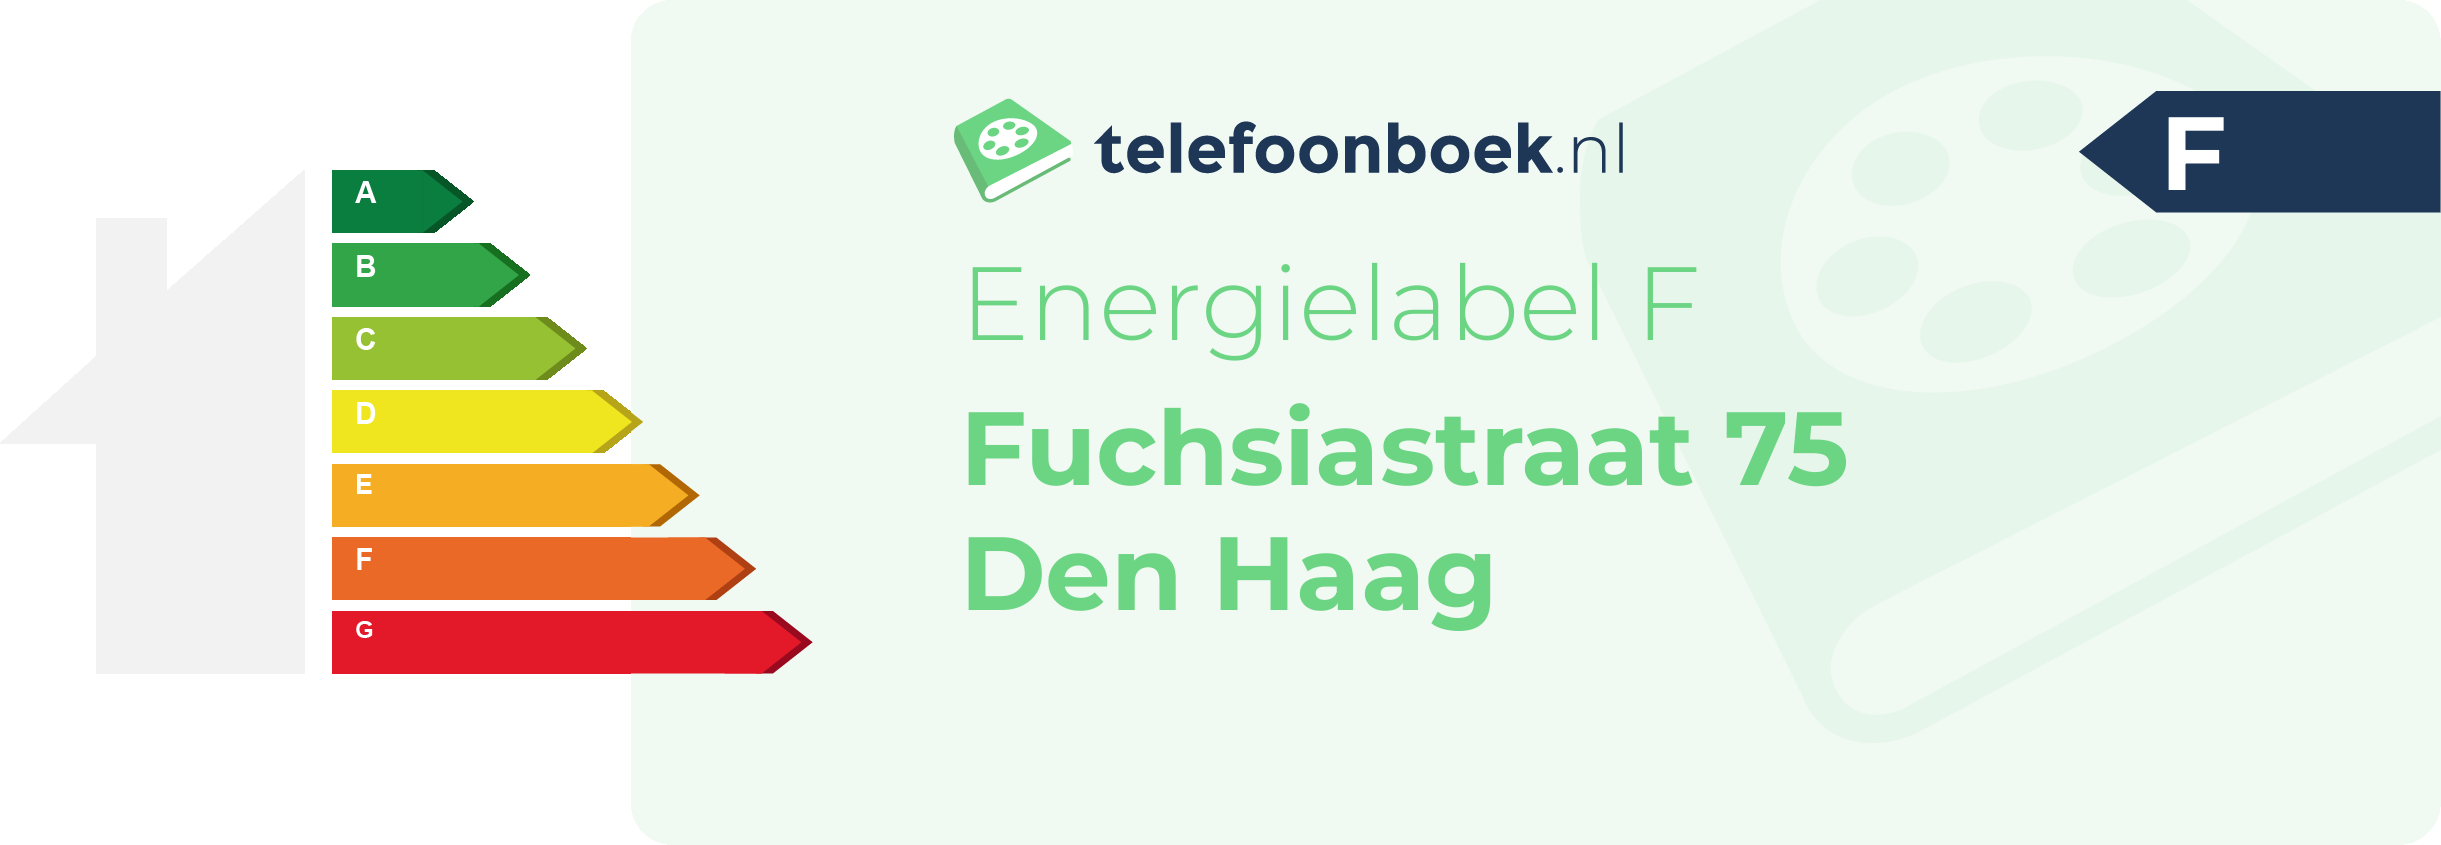 Energielabel Fuchsiastraat 75 Den Haag